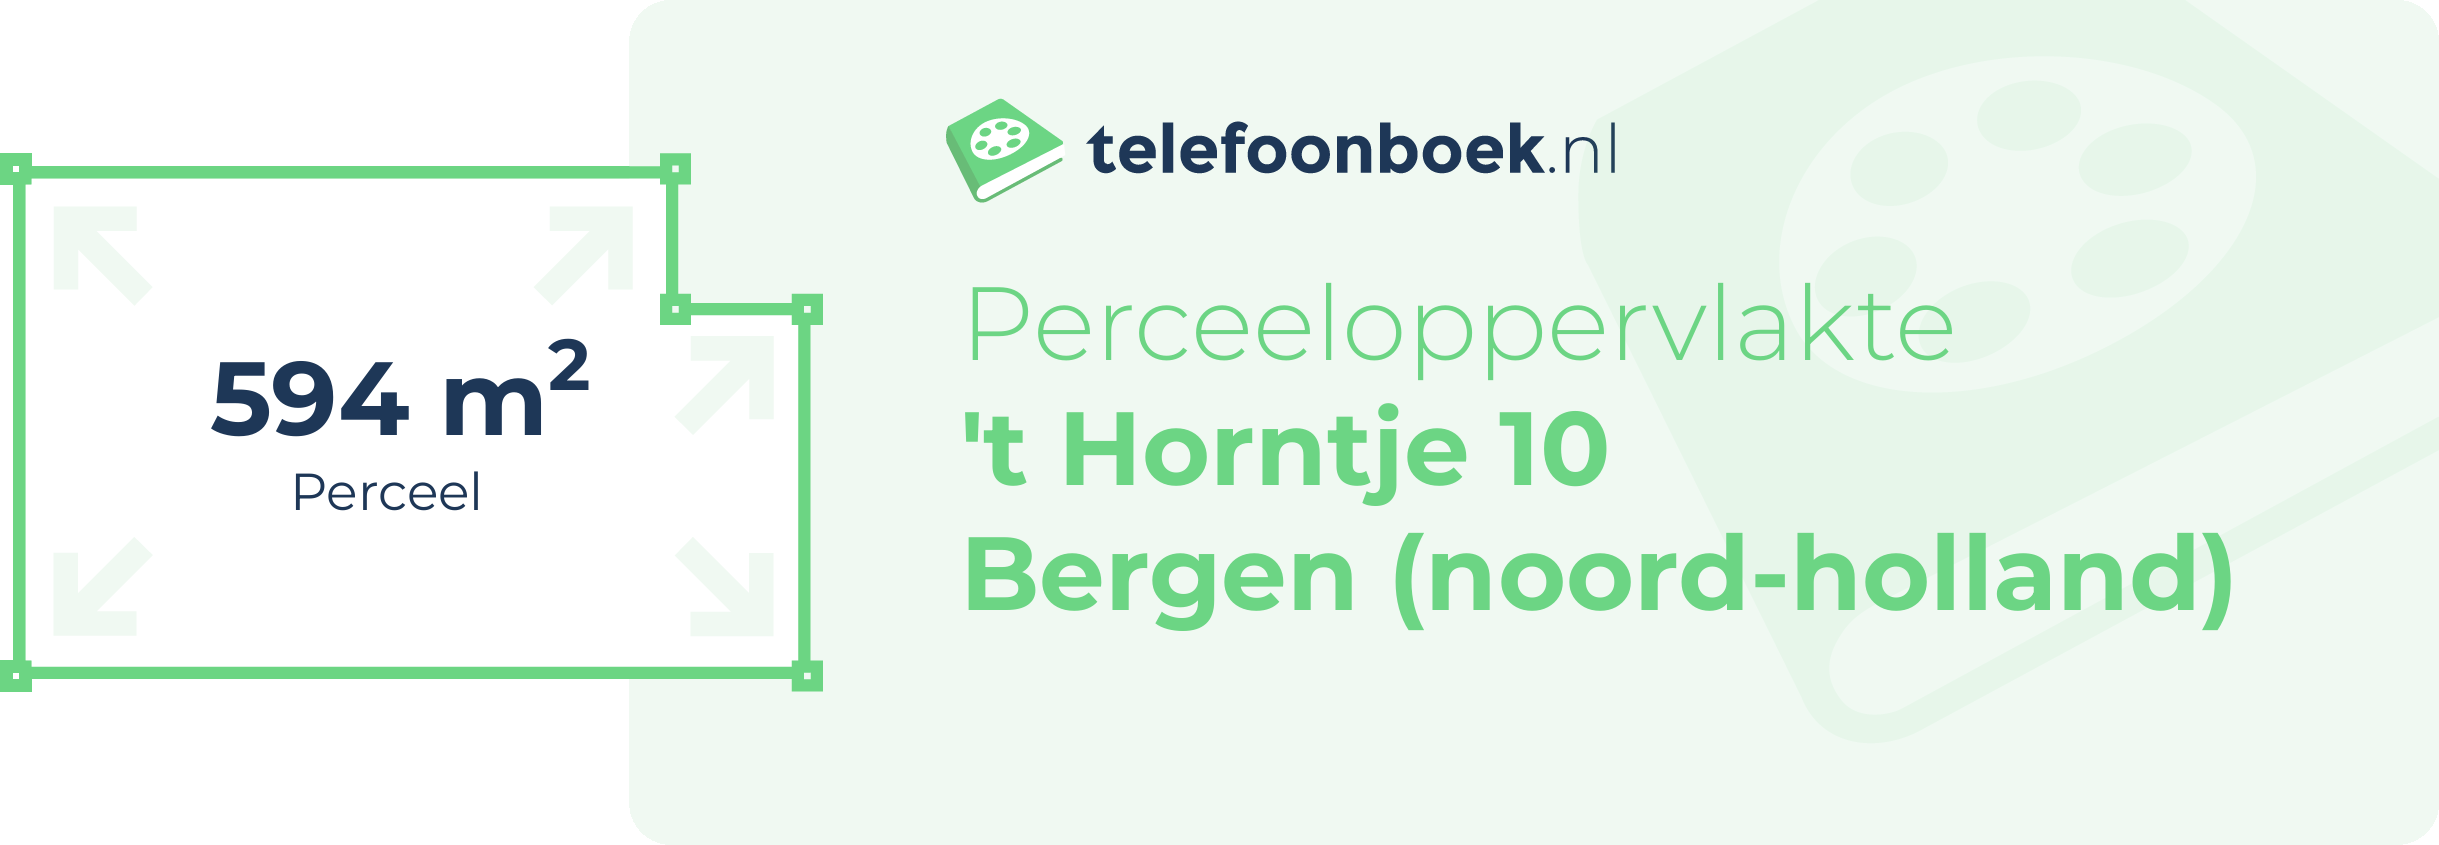 Perceeloppervlakte 't Horntje 10 Bergen (Noord-Holland)